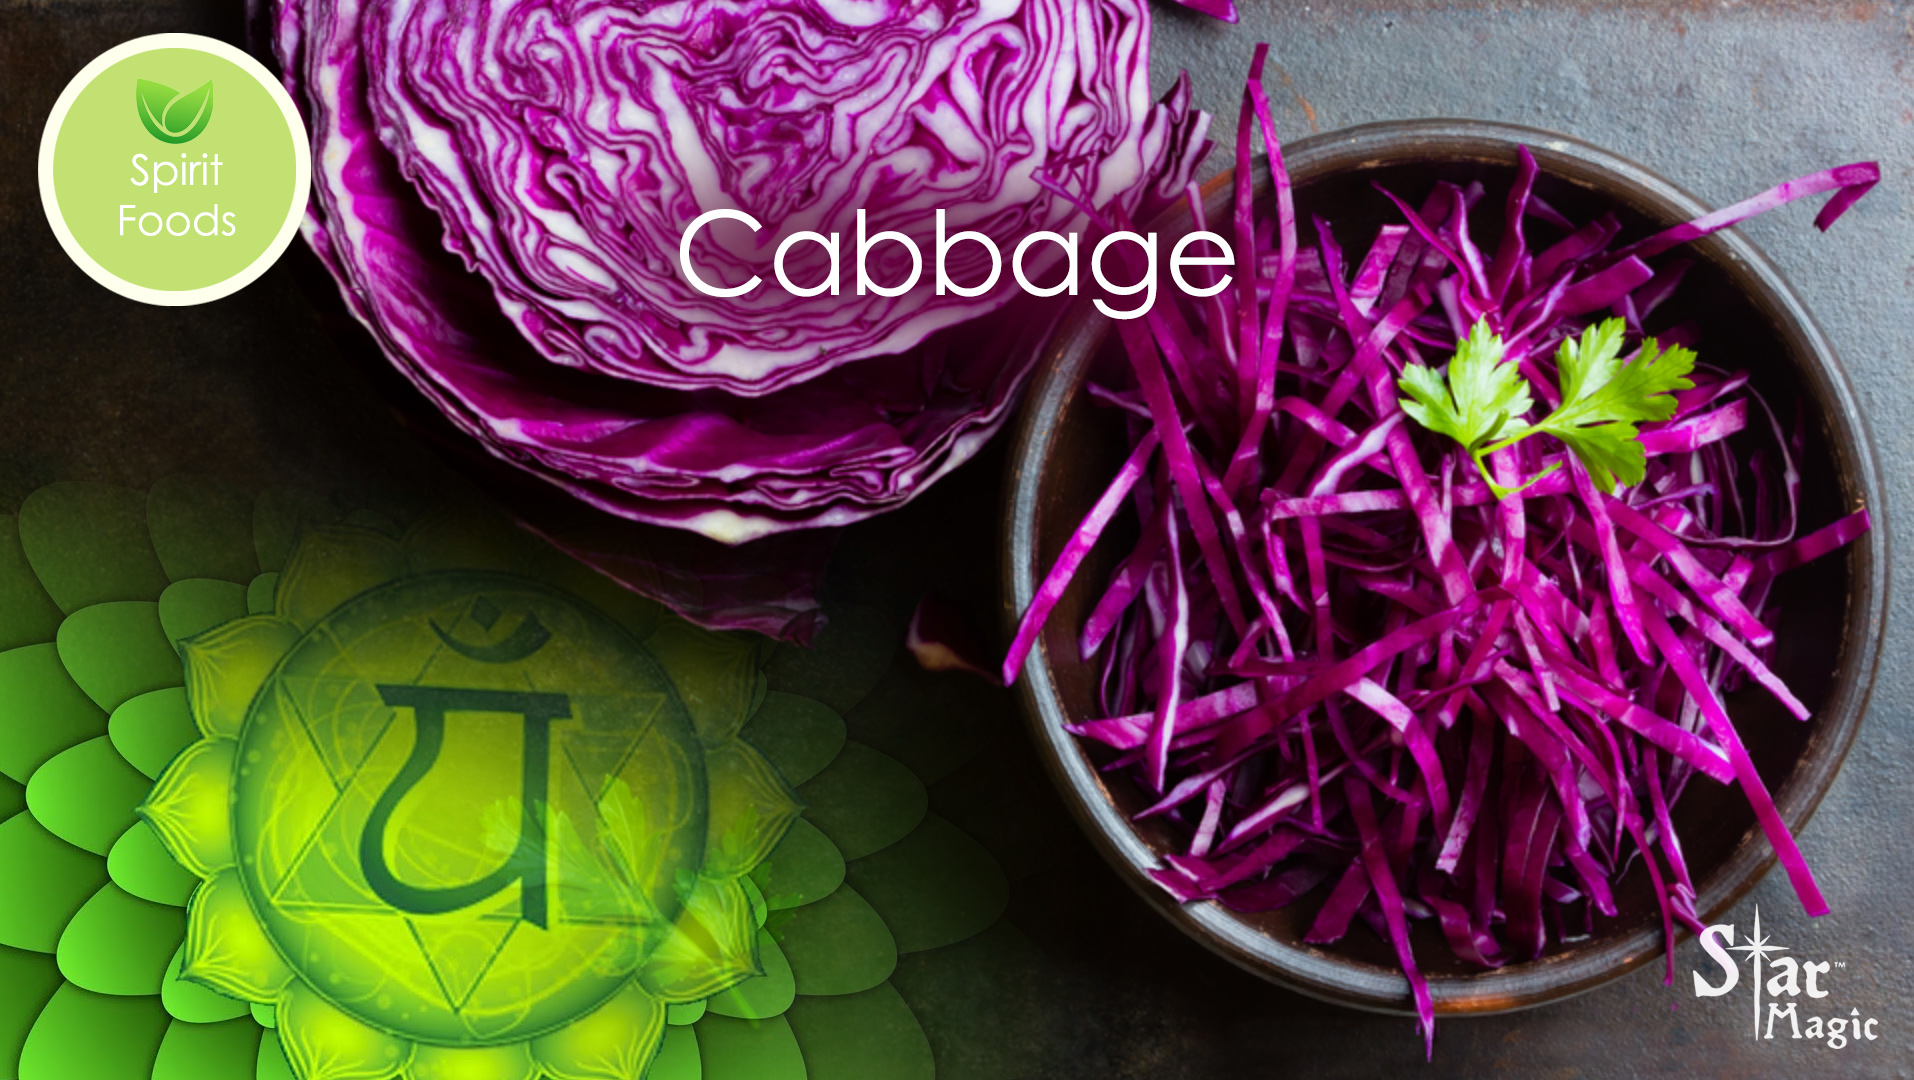 Spirit Food – Cabbage